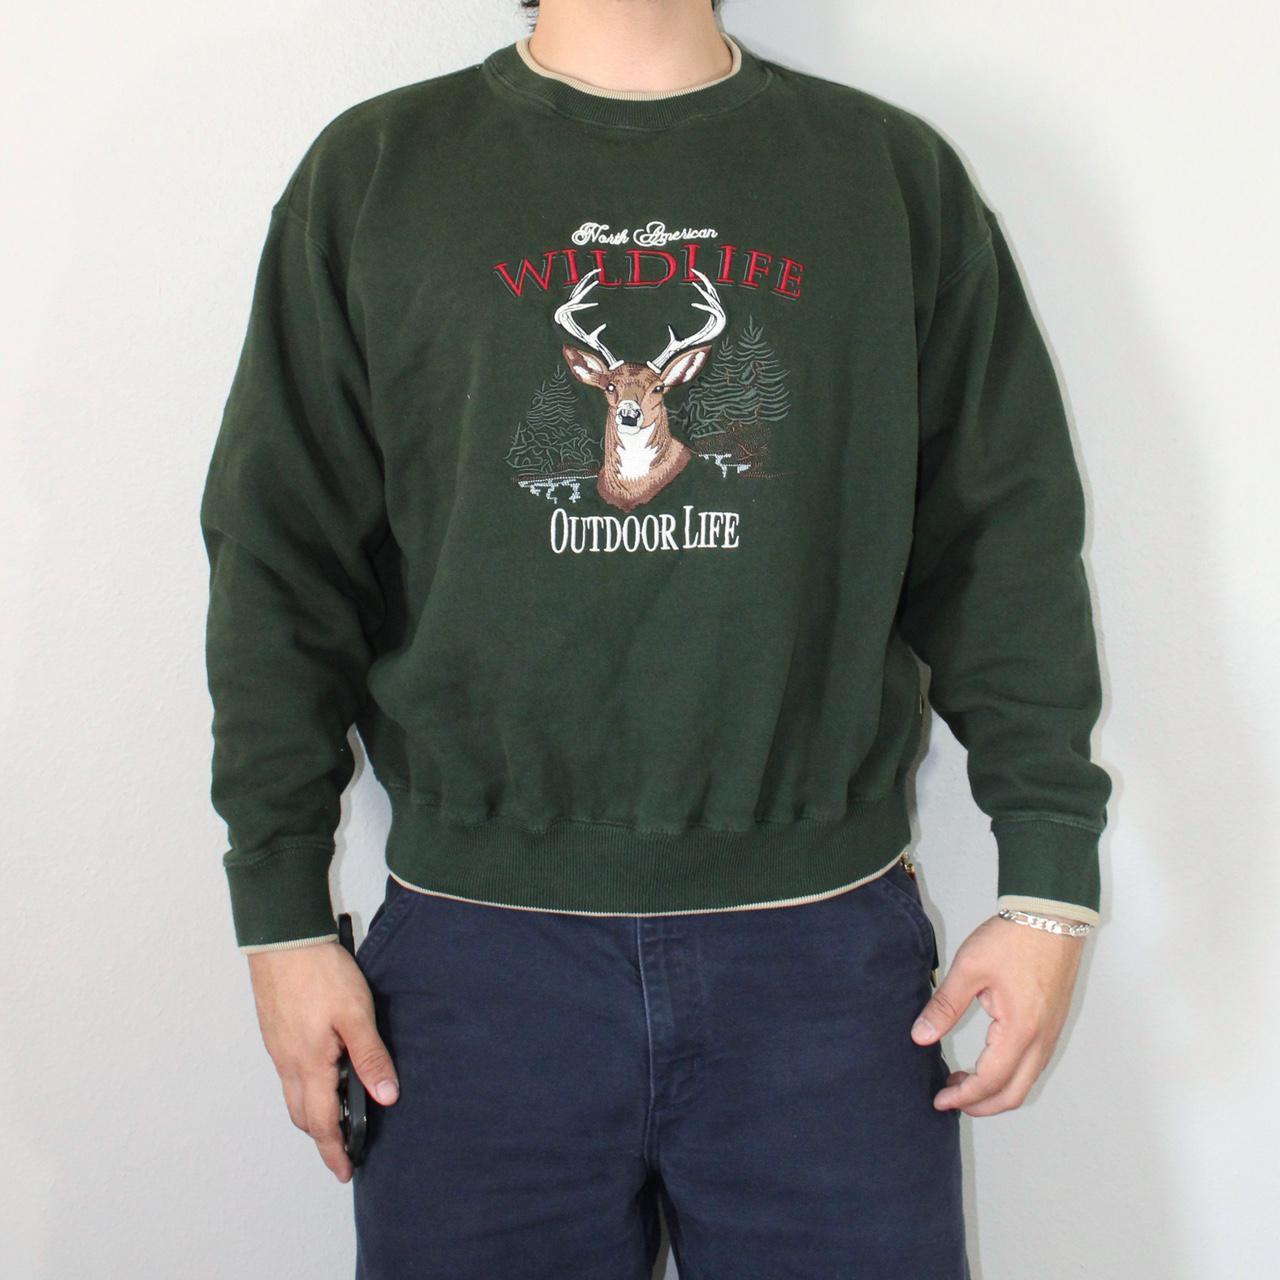 Product Image 1 - Vintage Deer Wildlife Sweater 

Excellent